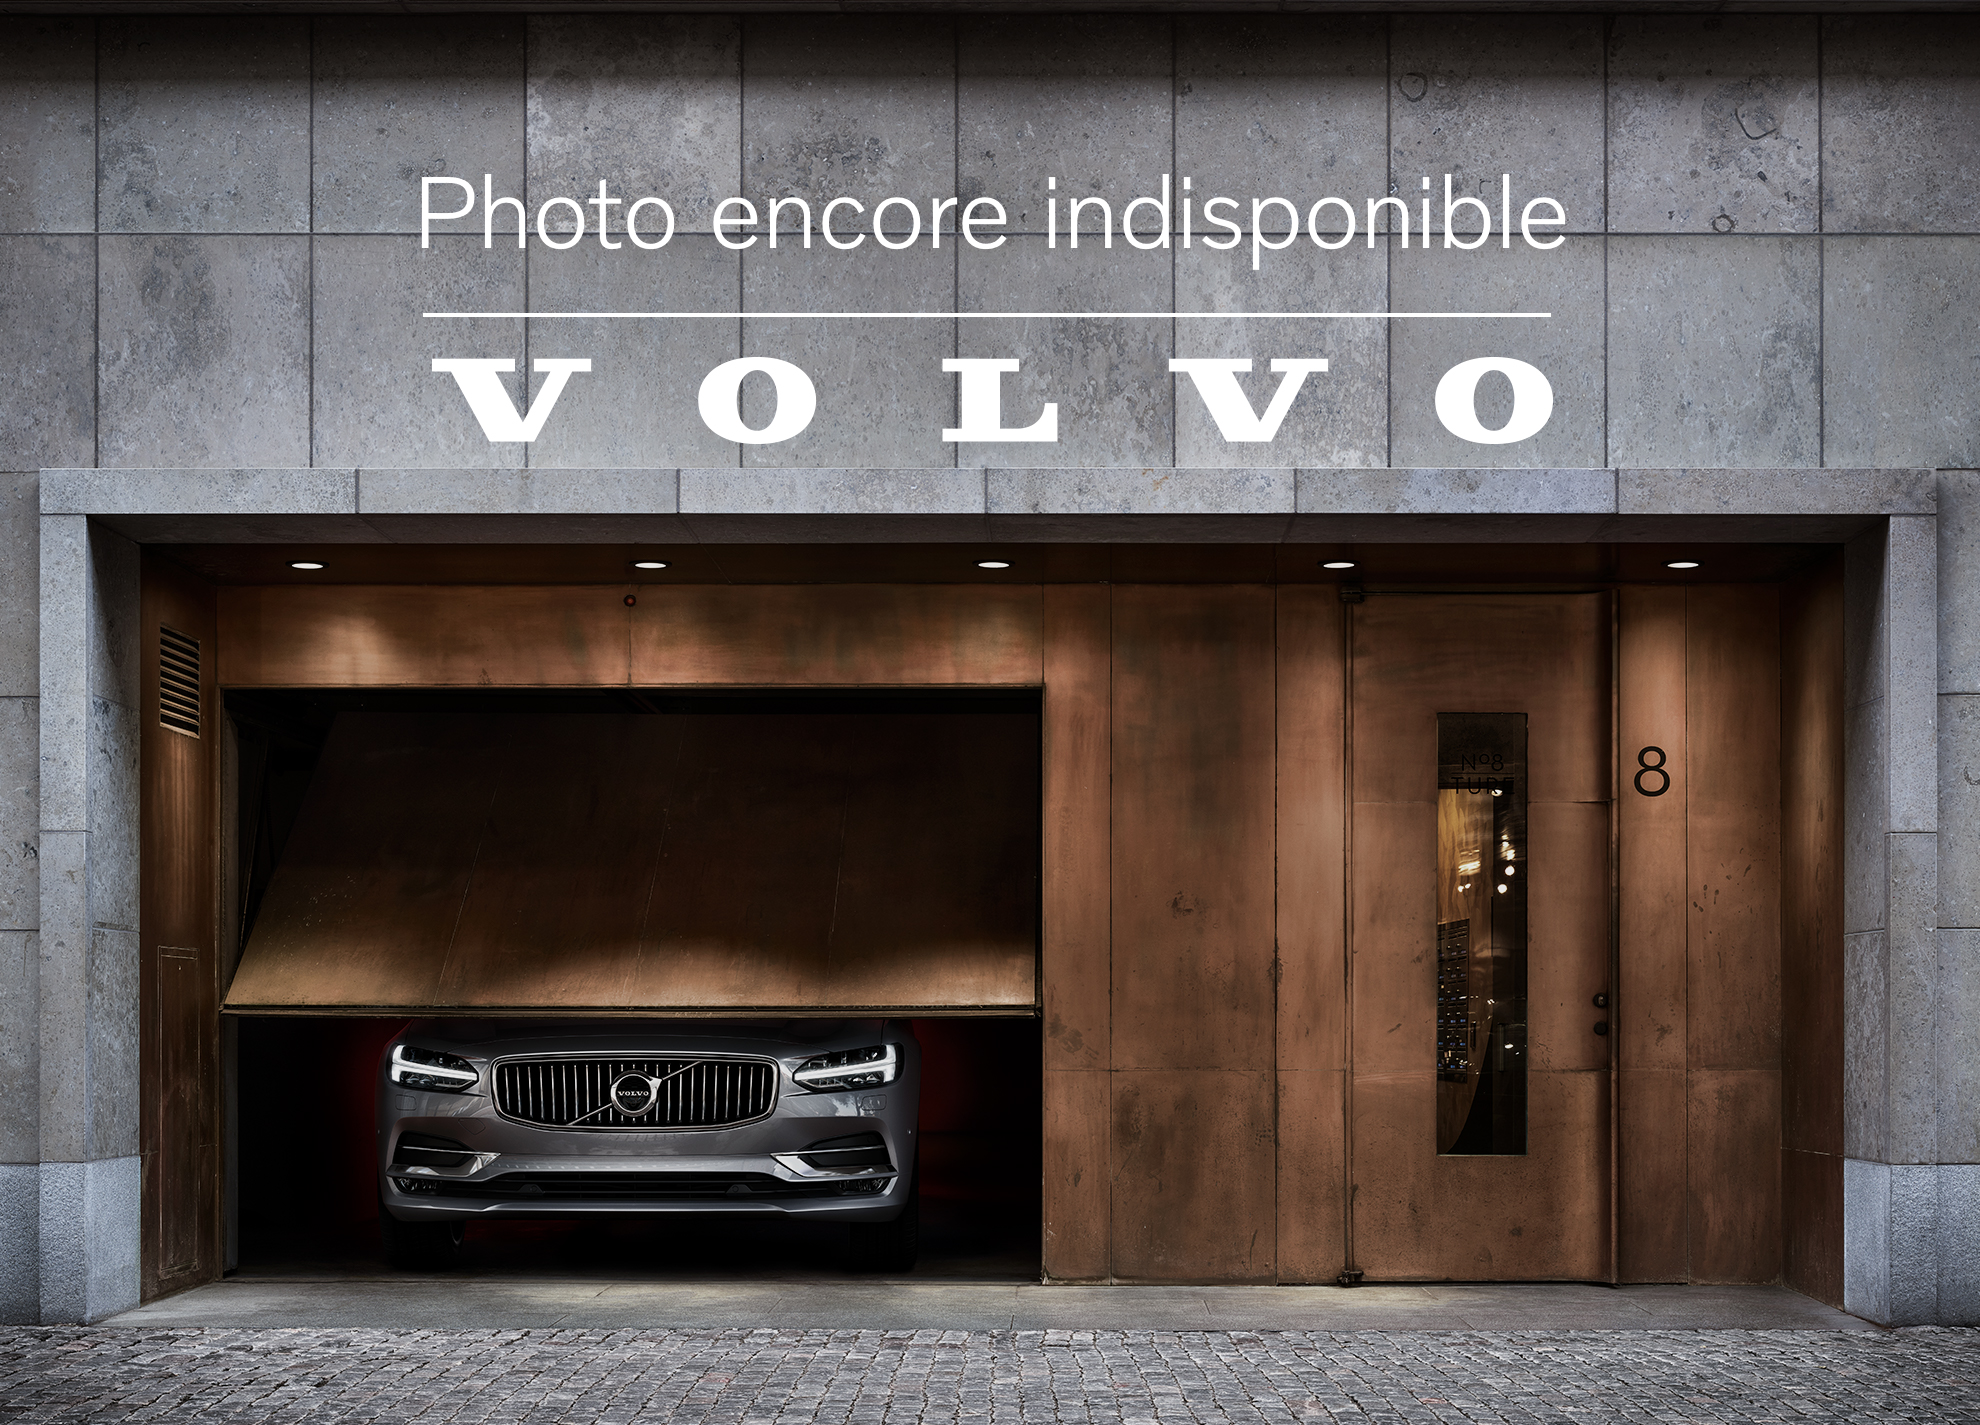 Volvo XC90 XC90 T8 Inscription (7 Seat)